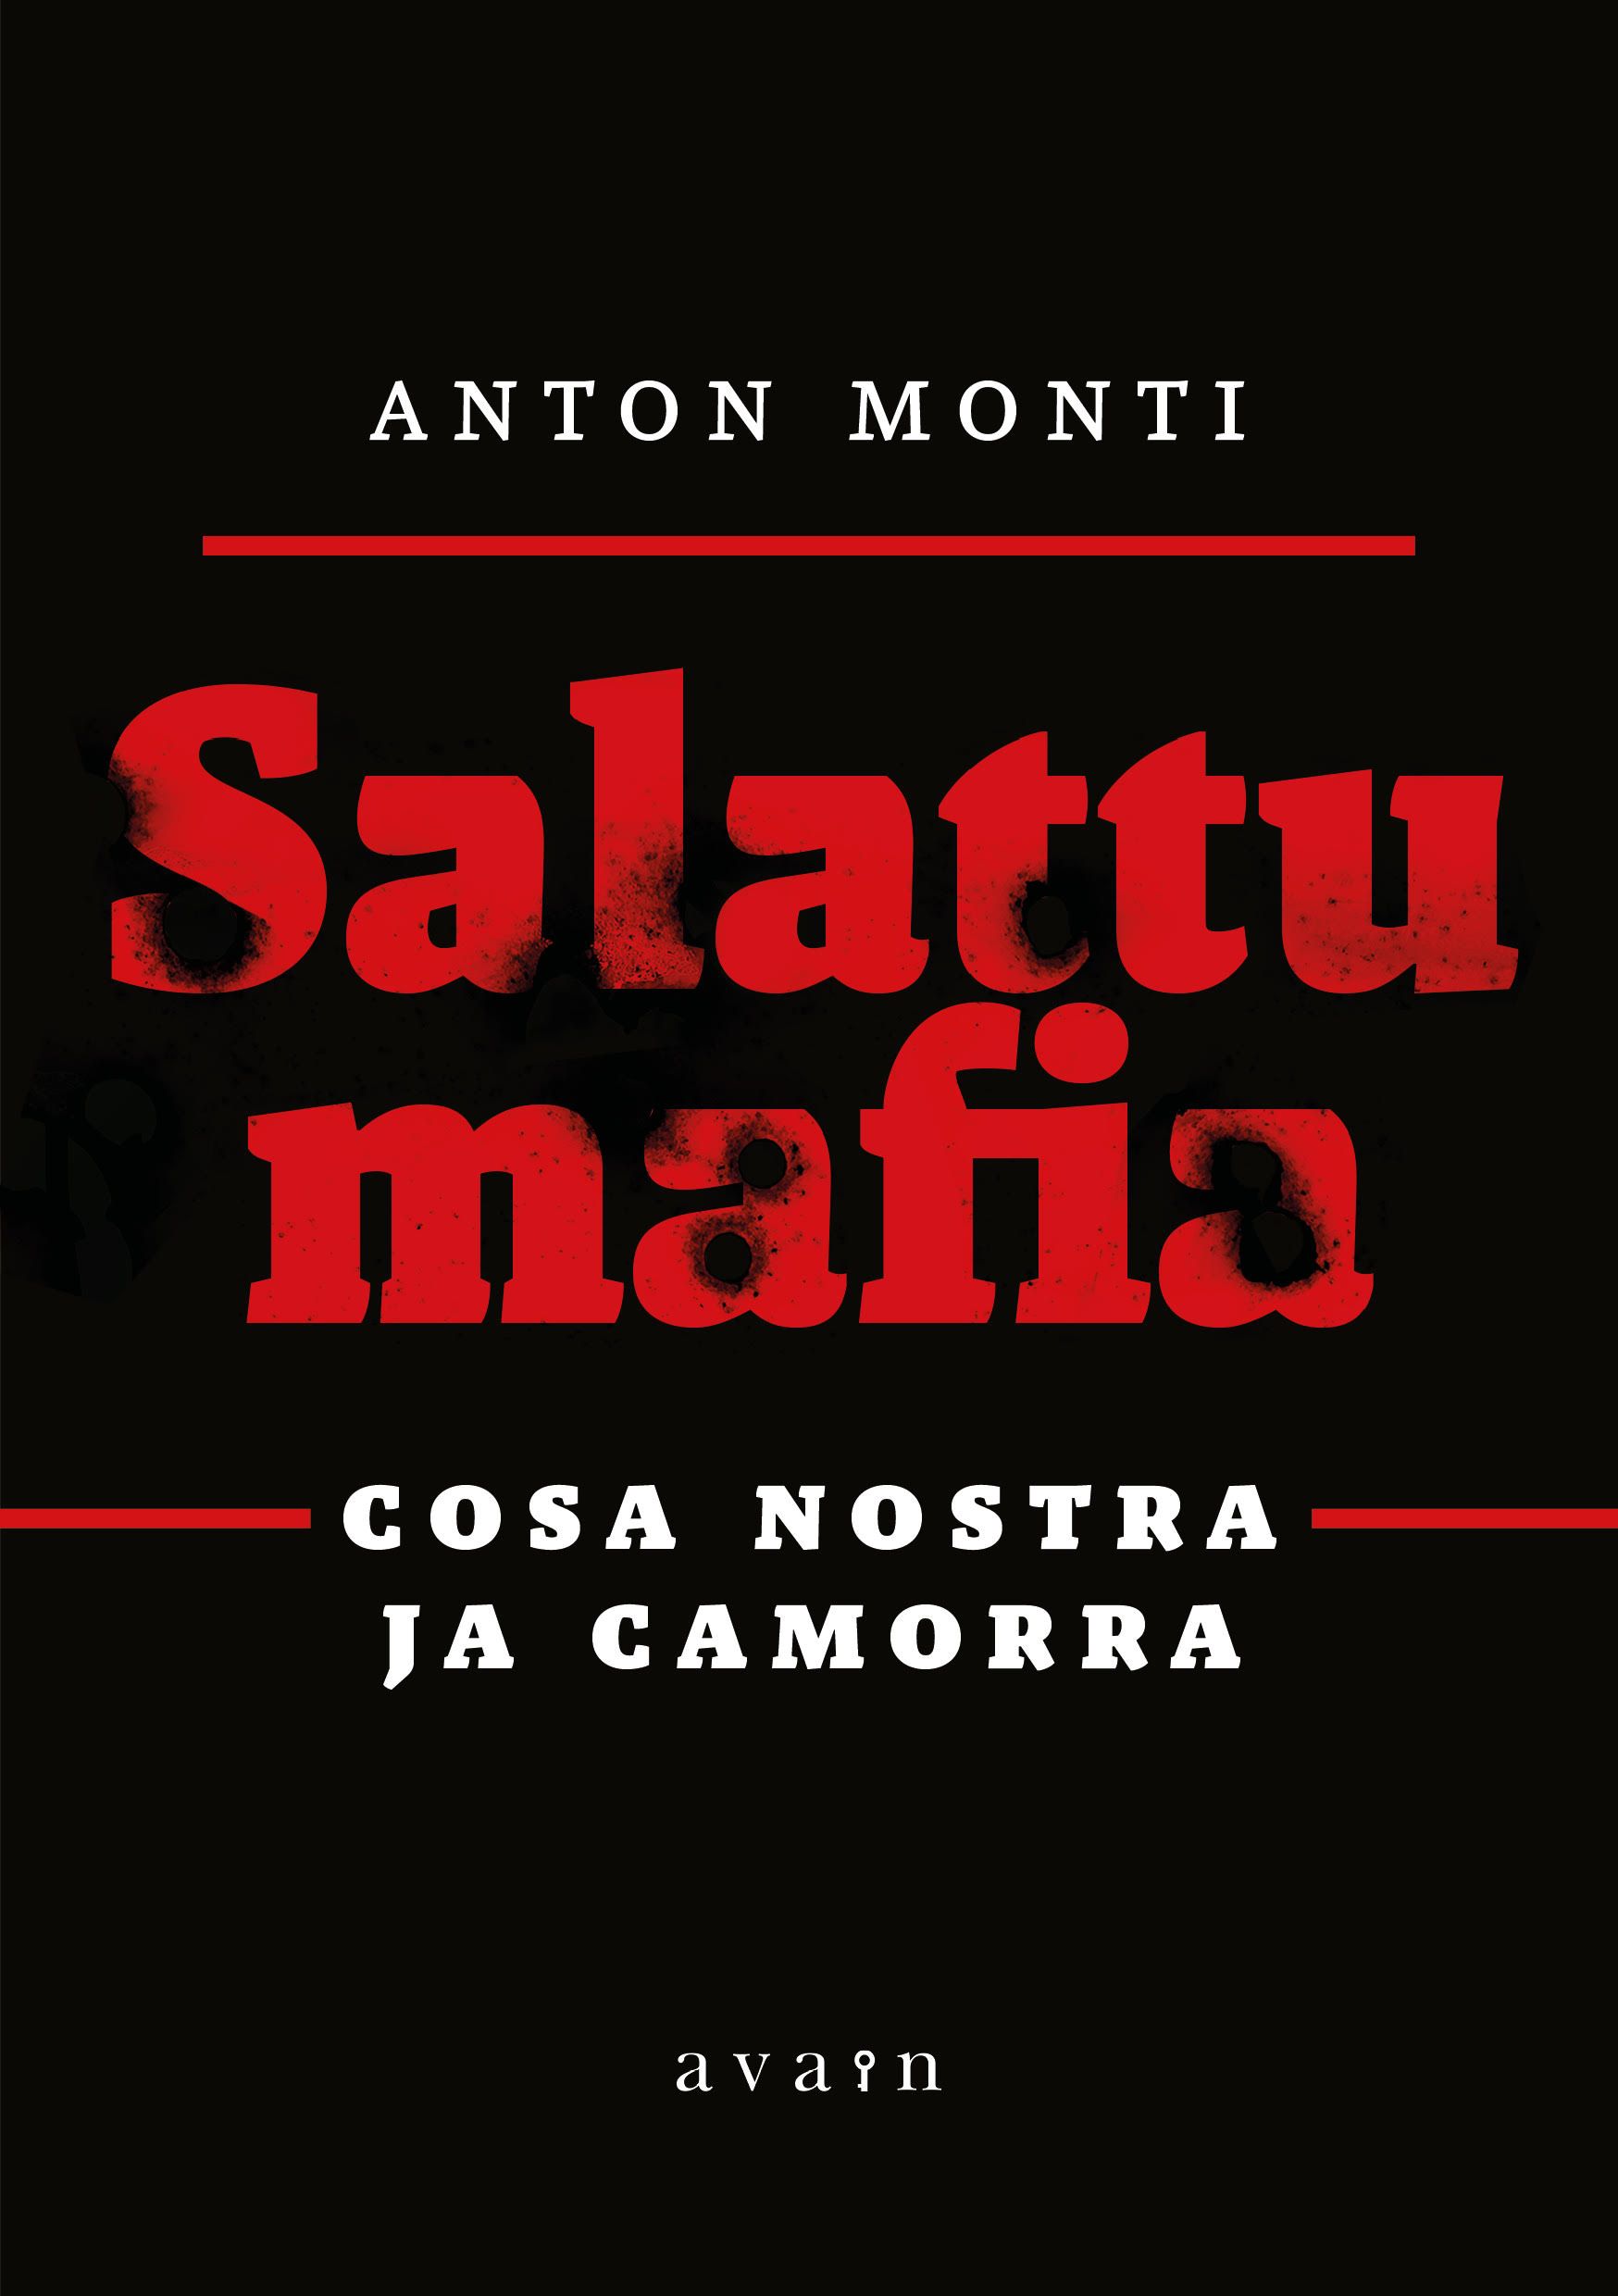 Anton Monti : Salattu mafia